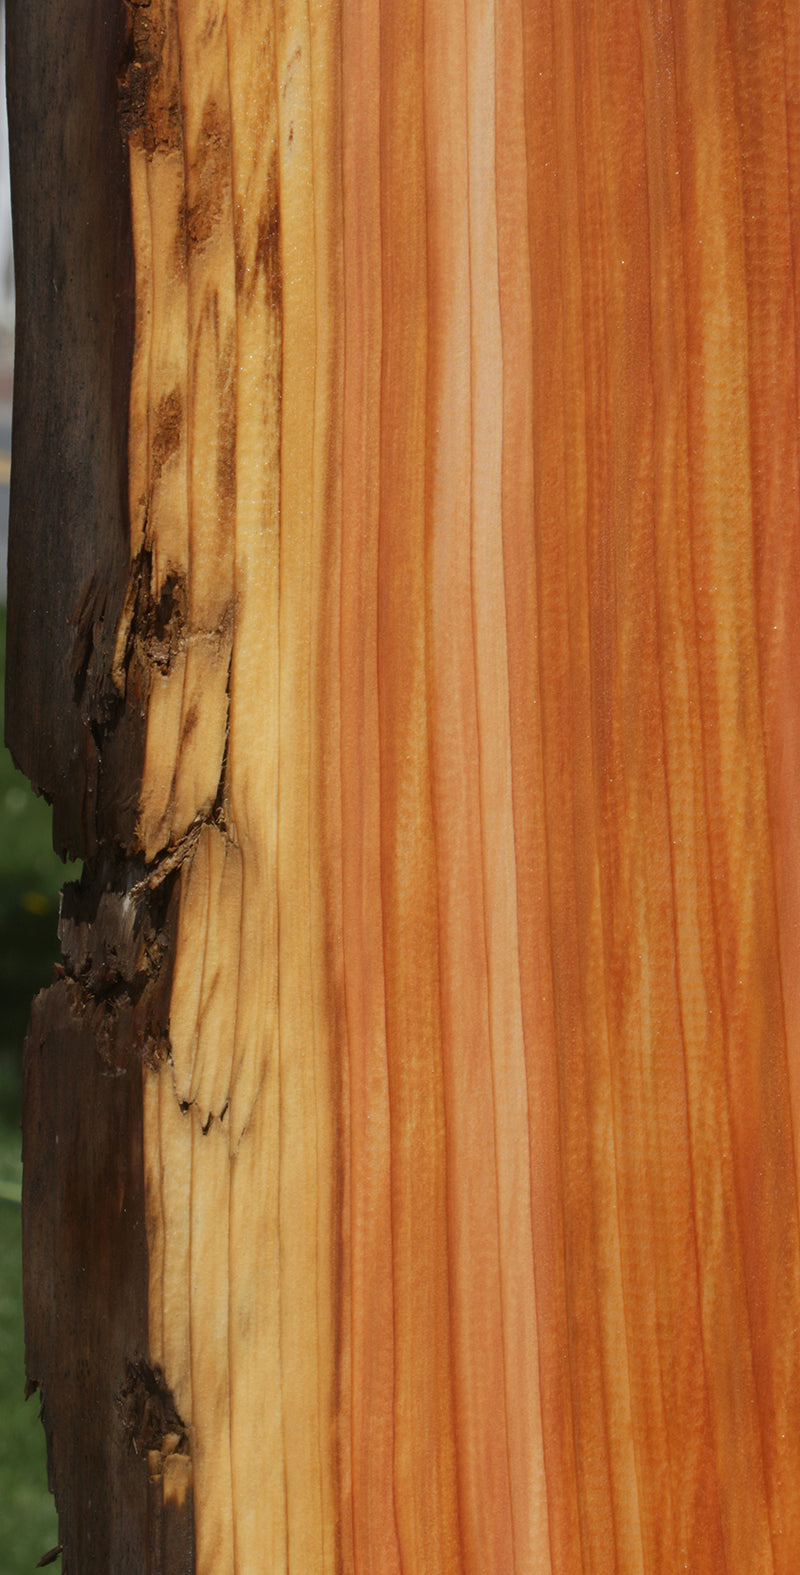 Western Red Cedar Live Edge Lumber